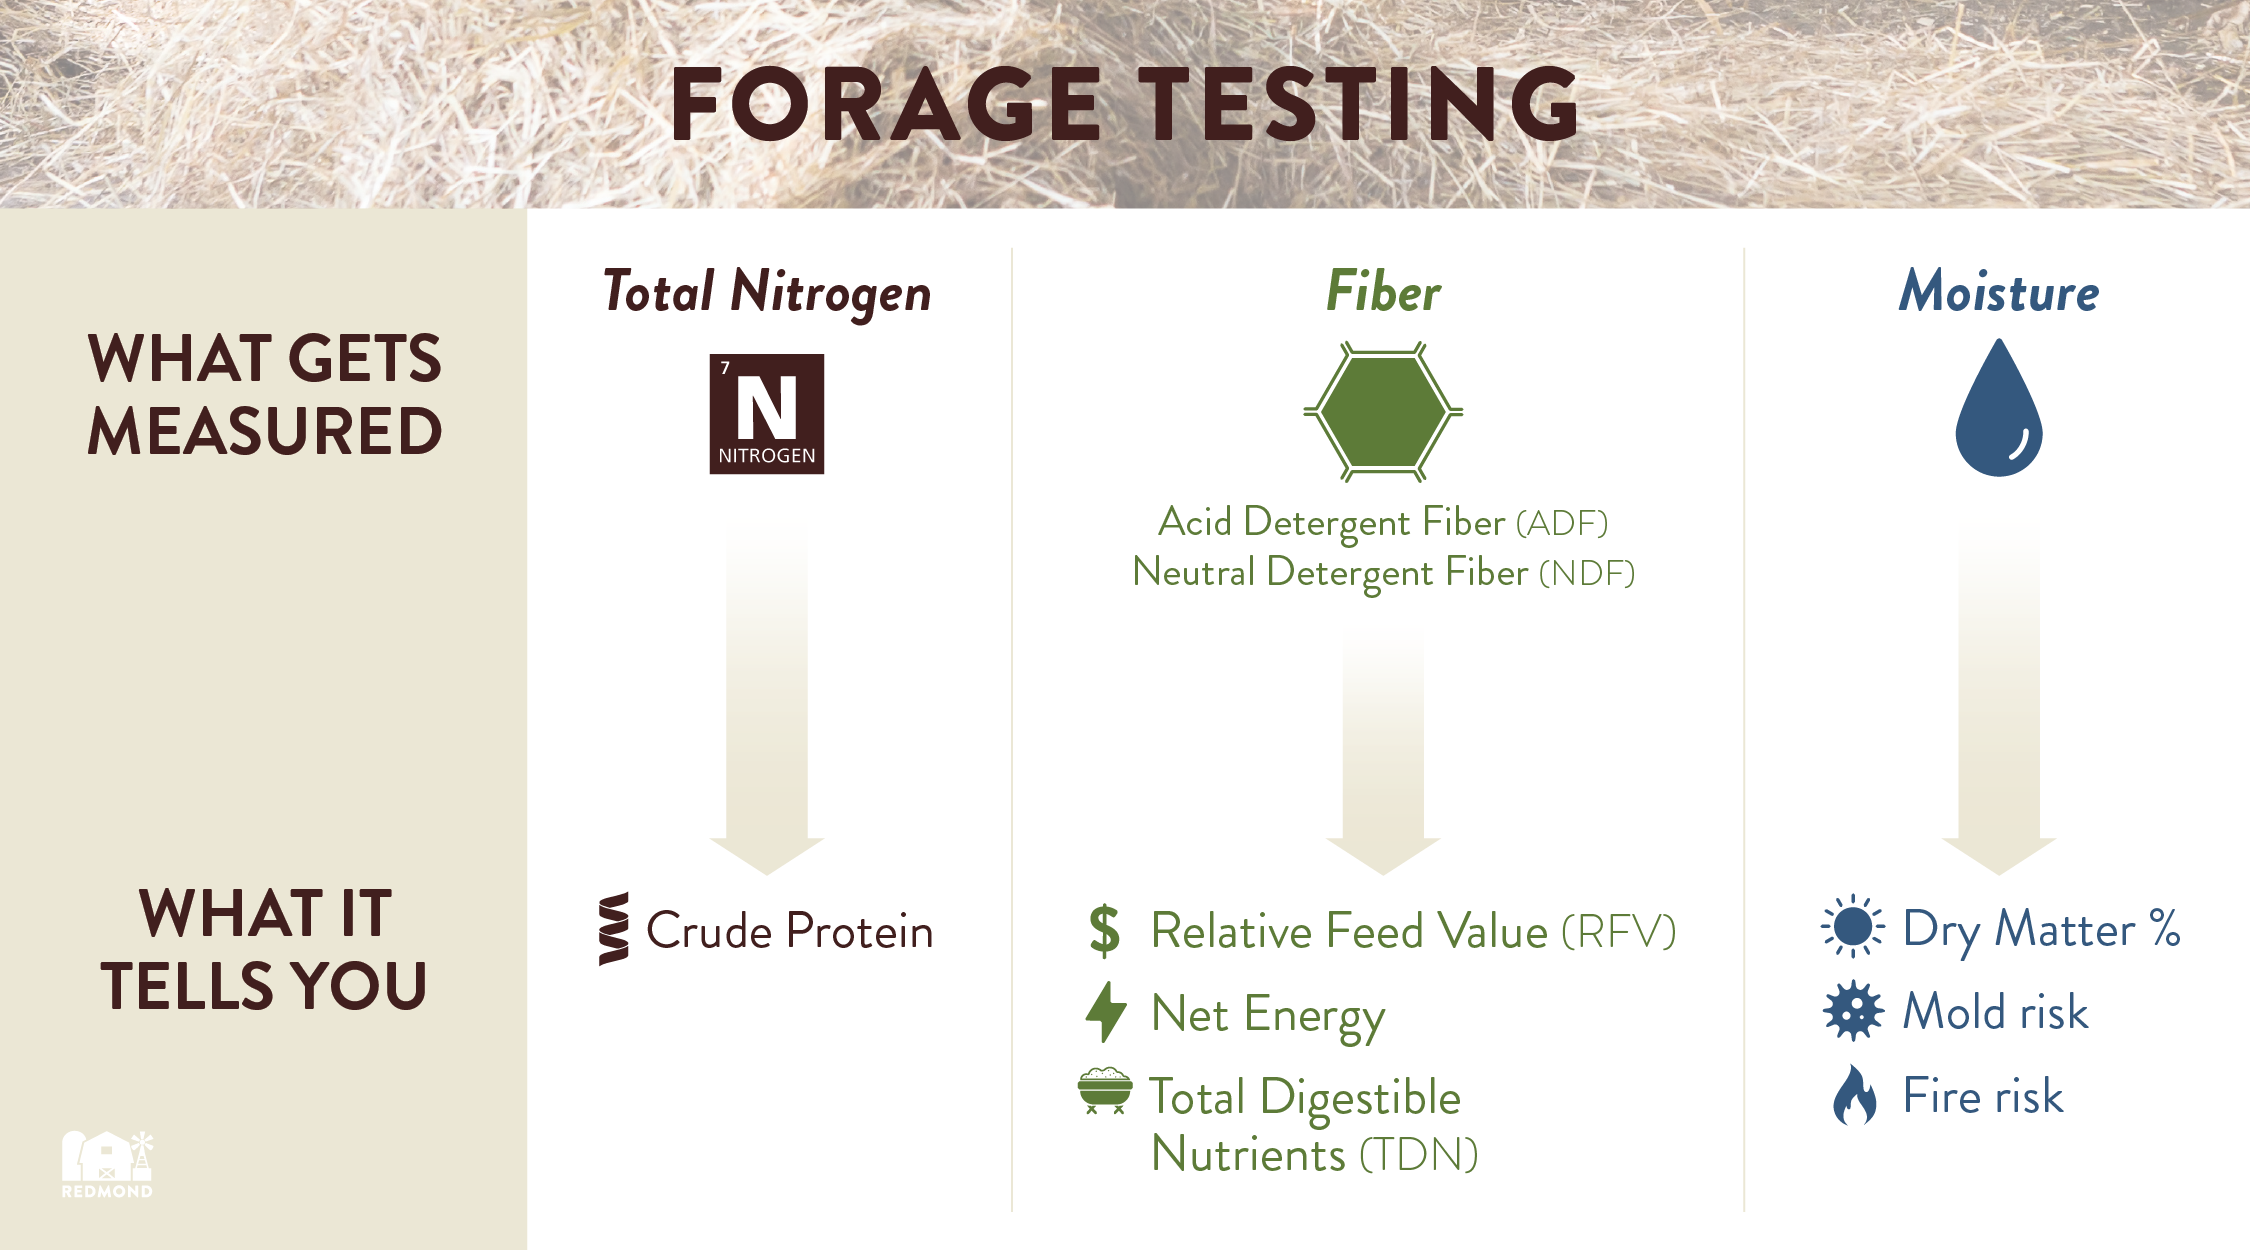 Understanding forage testing results